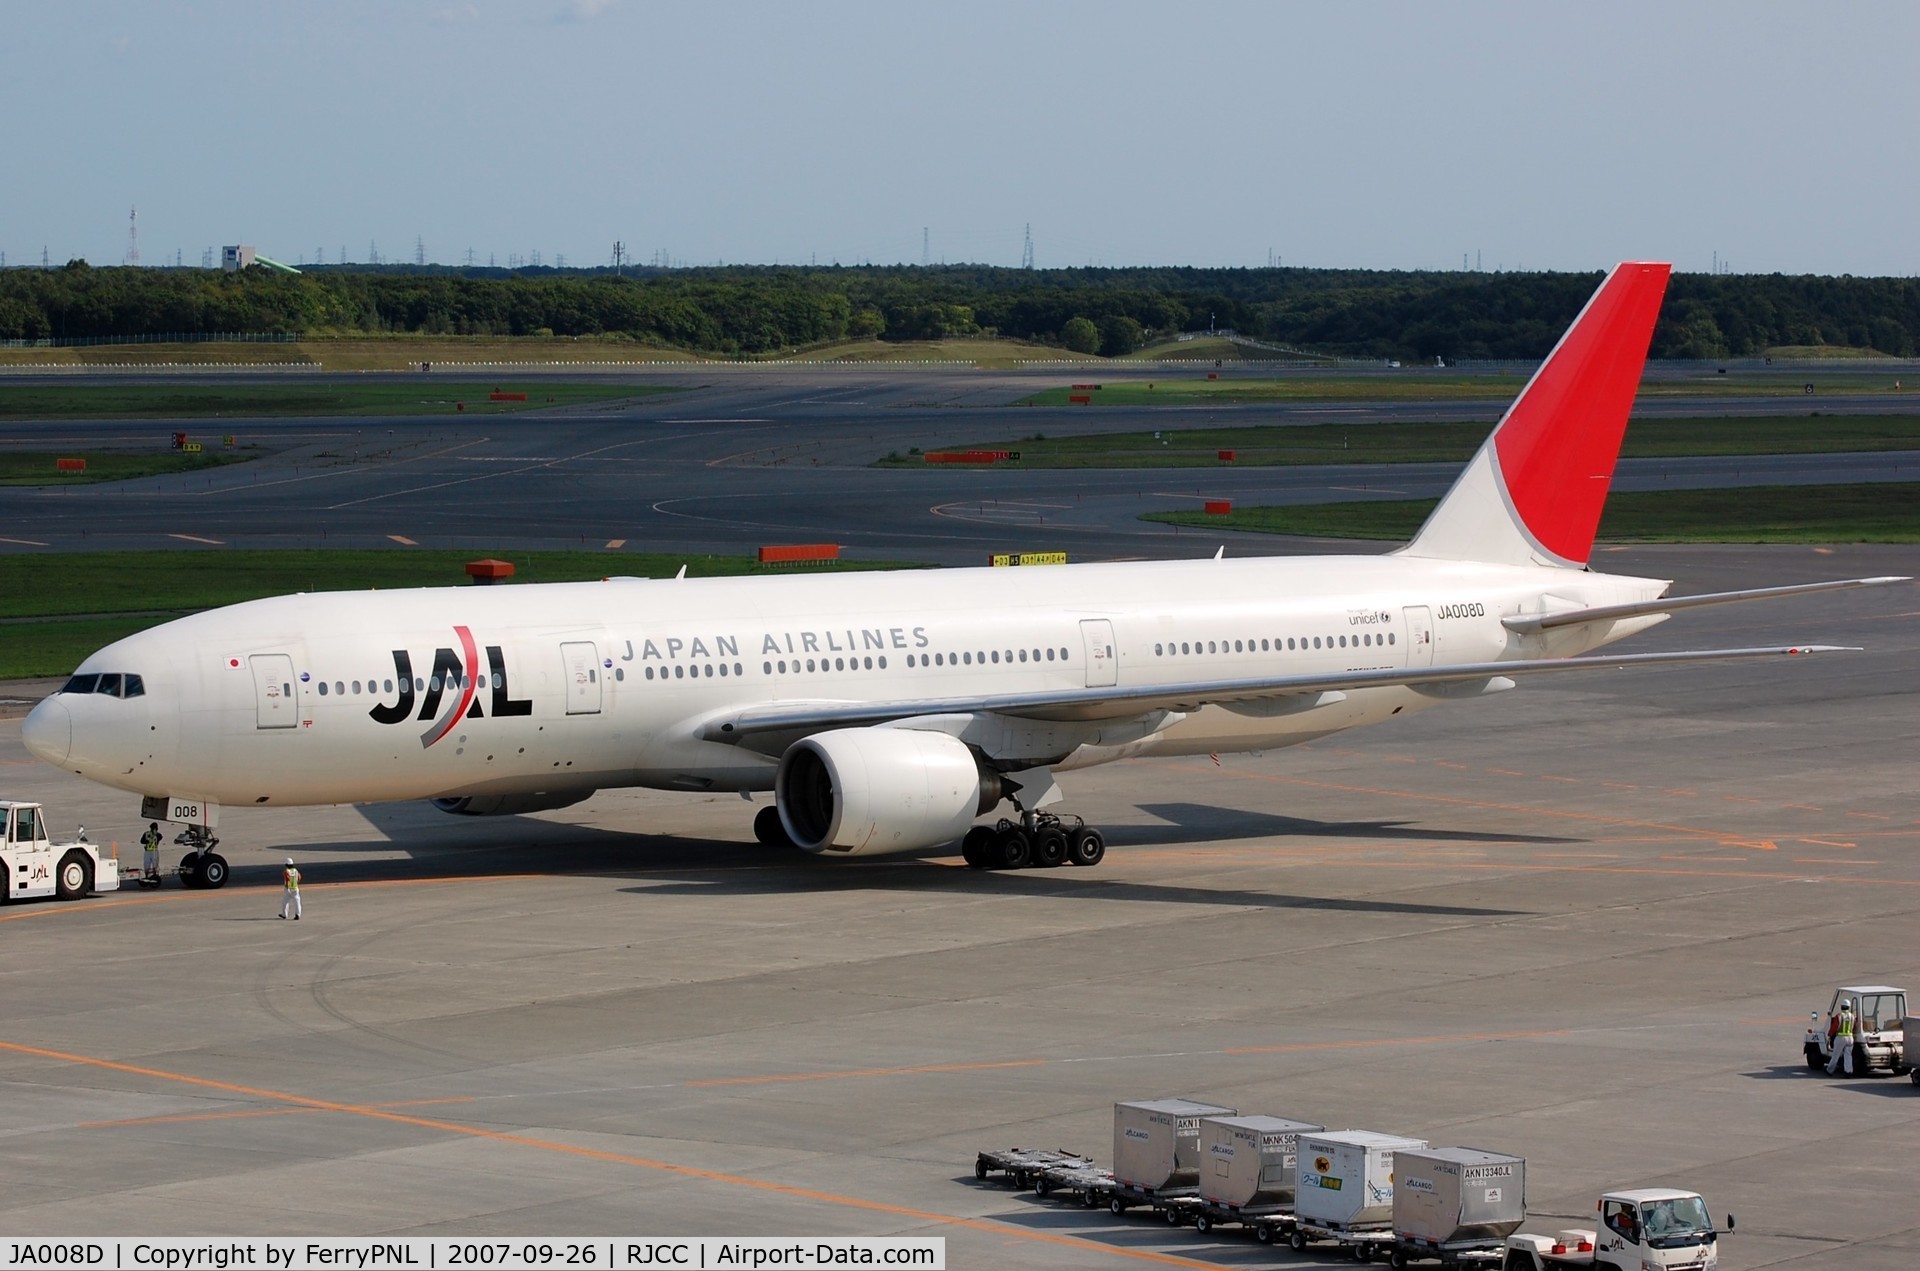 JA008D, 1998 Boeing 777-289 C/N 27640, JAL B772 pushed-back in CTS